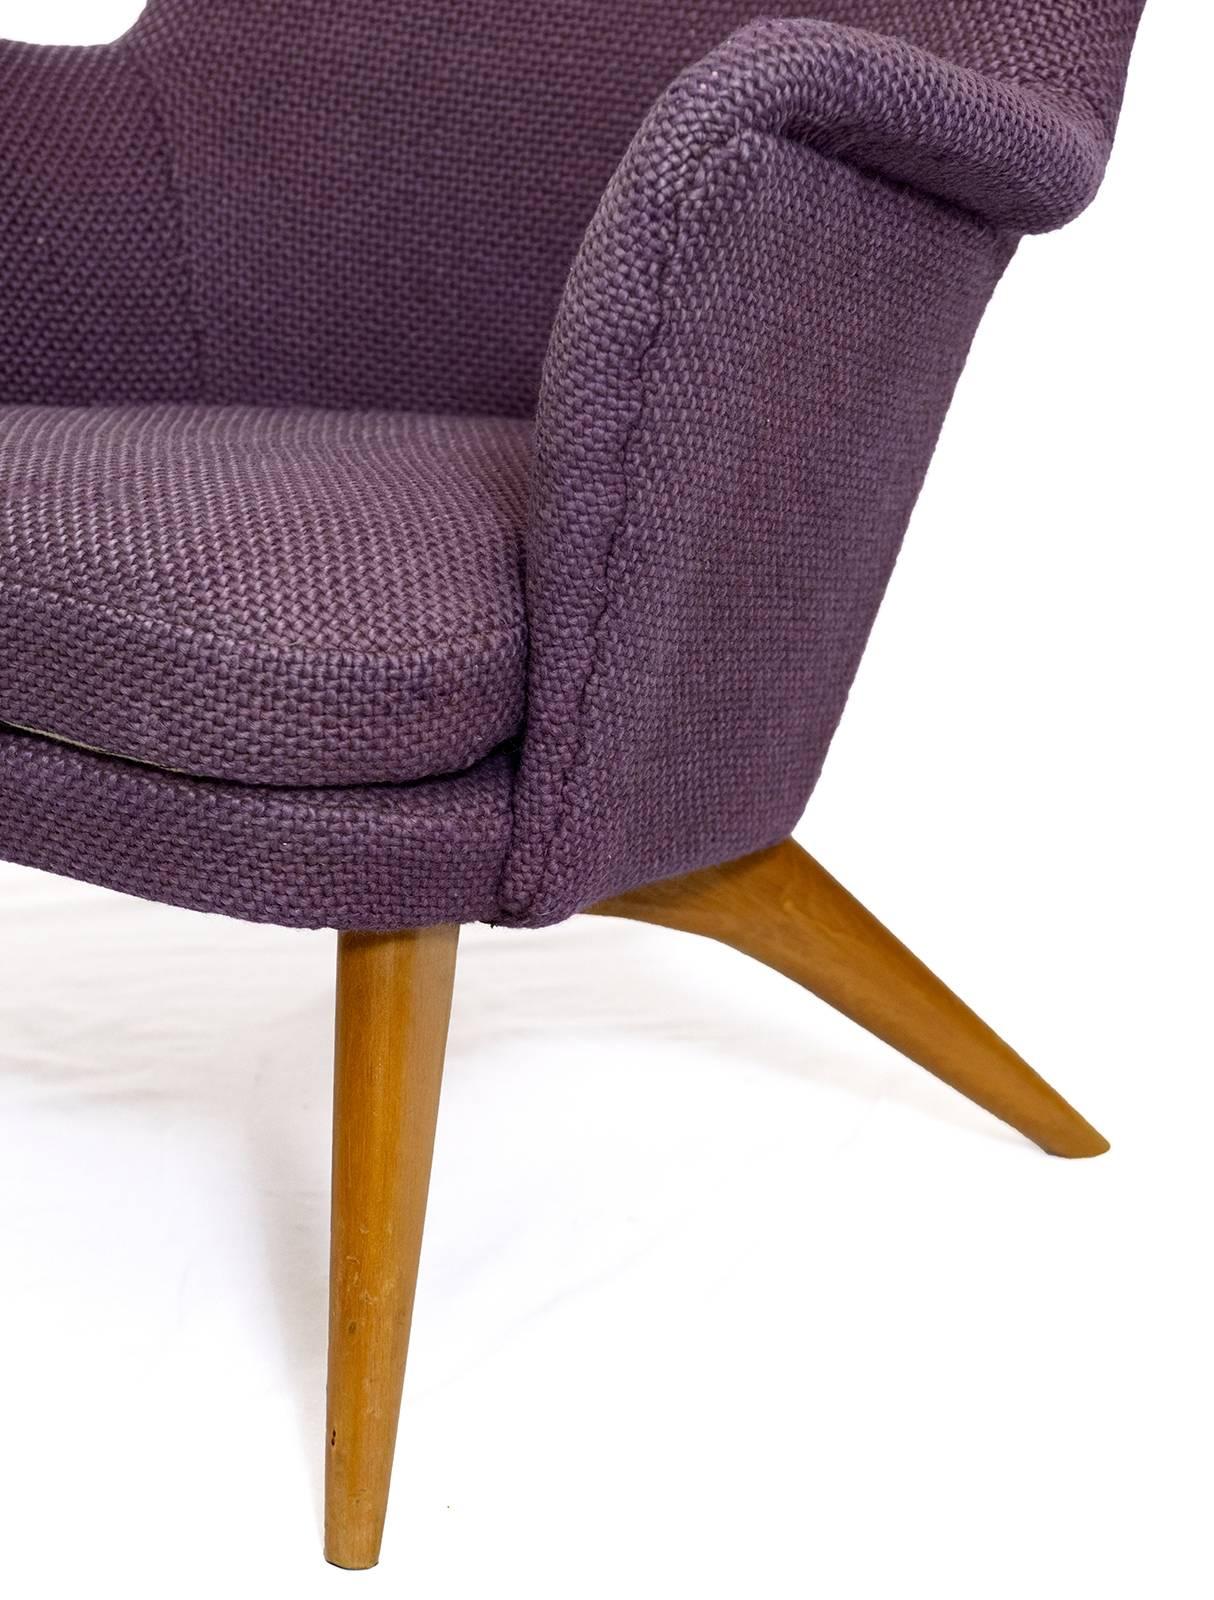 Carl Gustav Hiort af Ornäs Lounge Chair For Sale 1